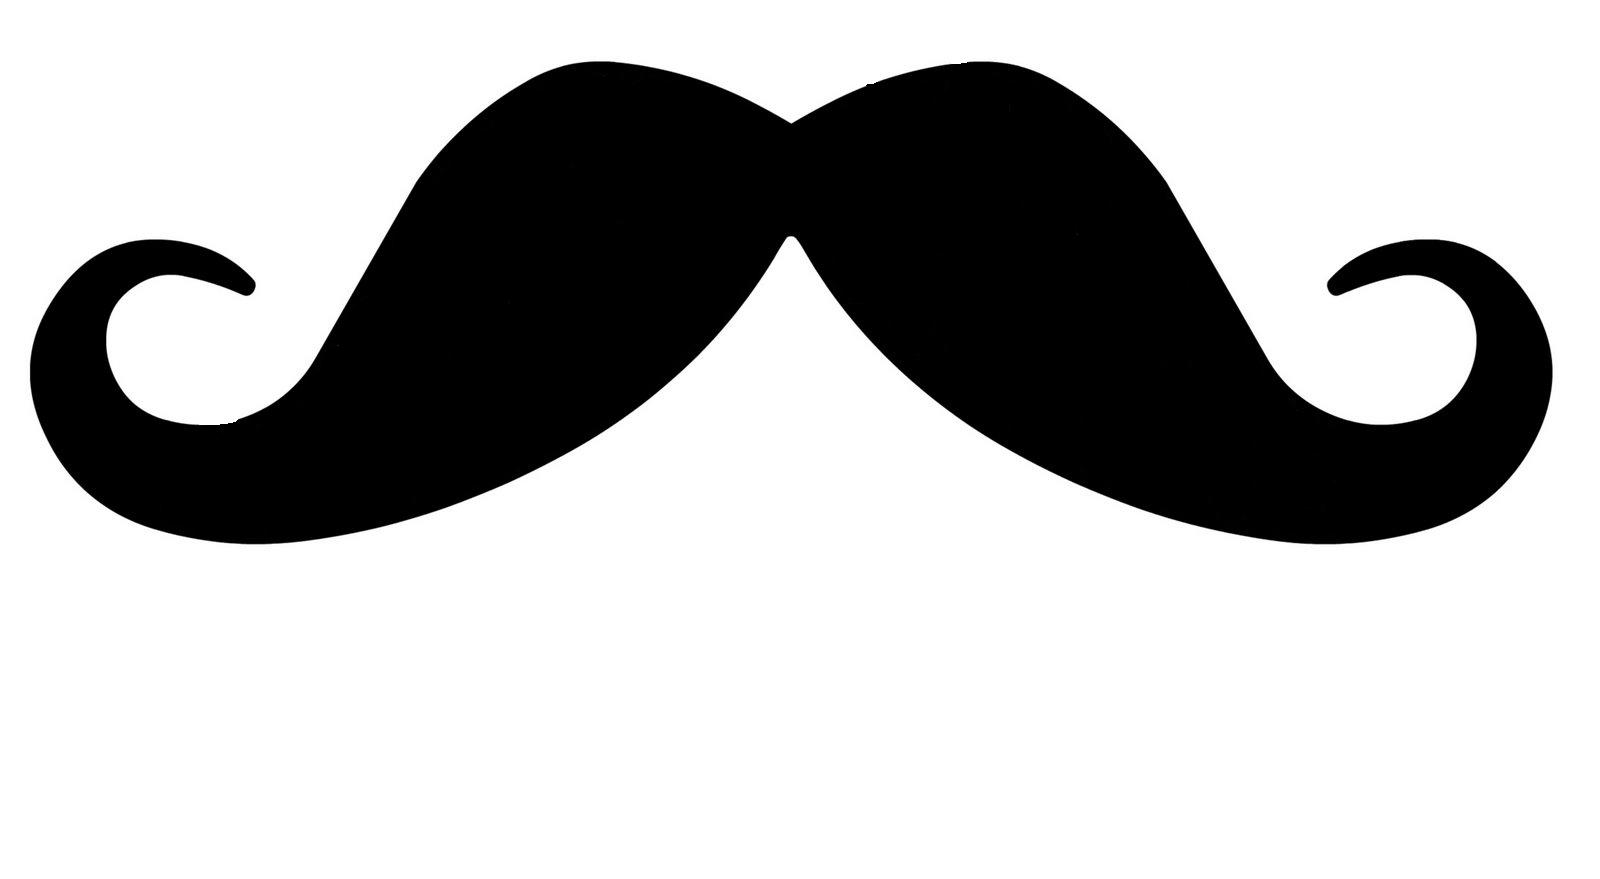 Mustache clip art vector mustache graphics image 4 - Cliparting.com